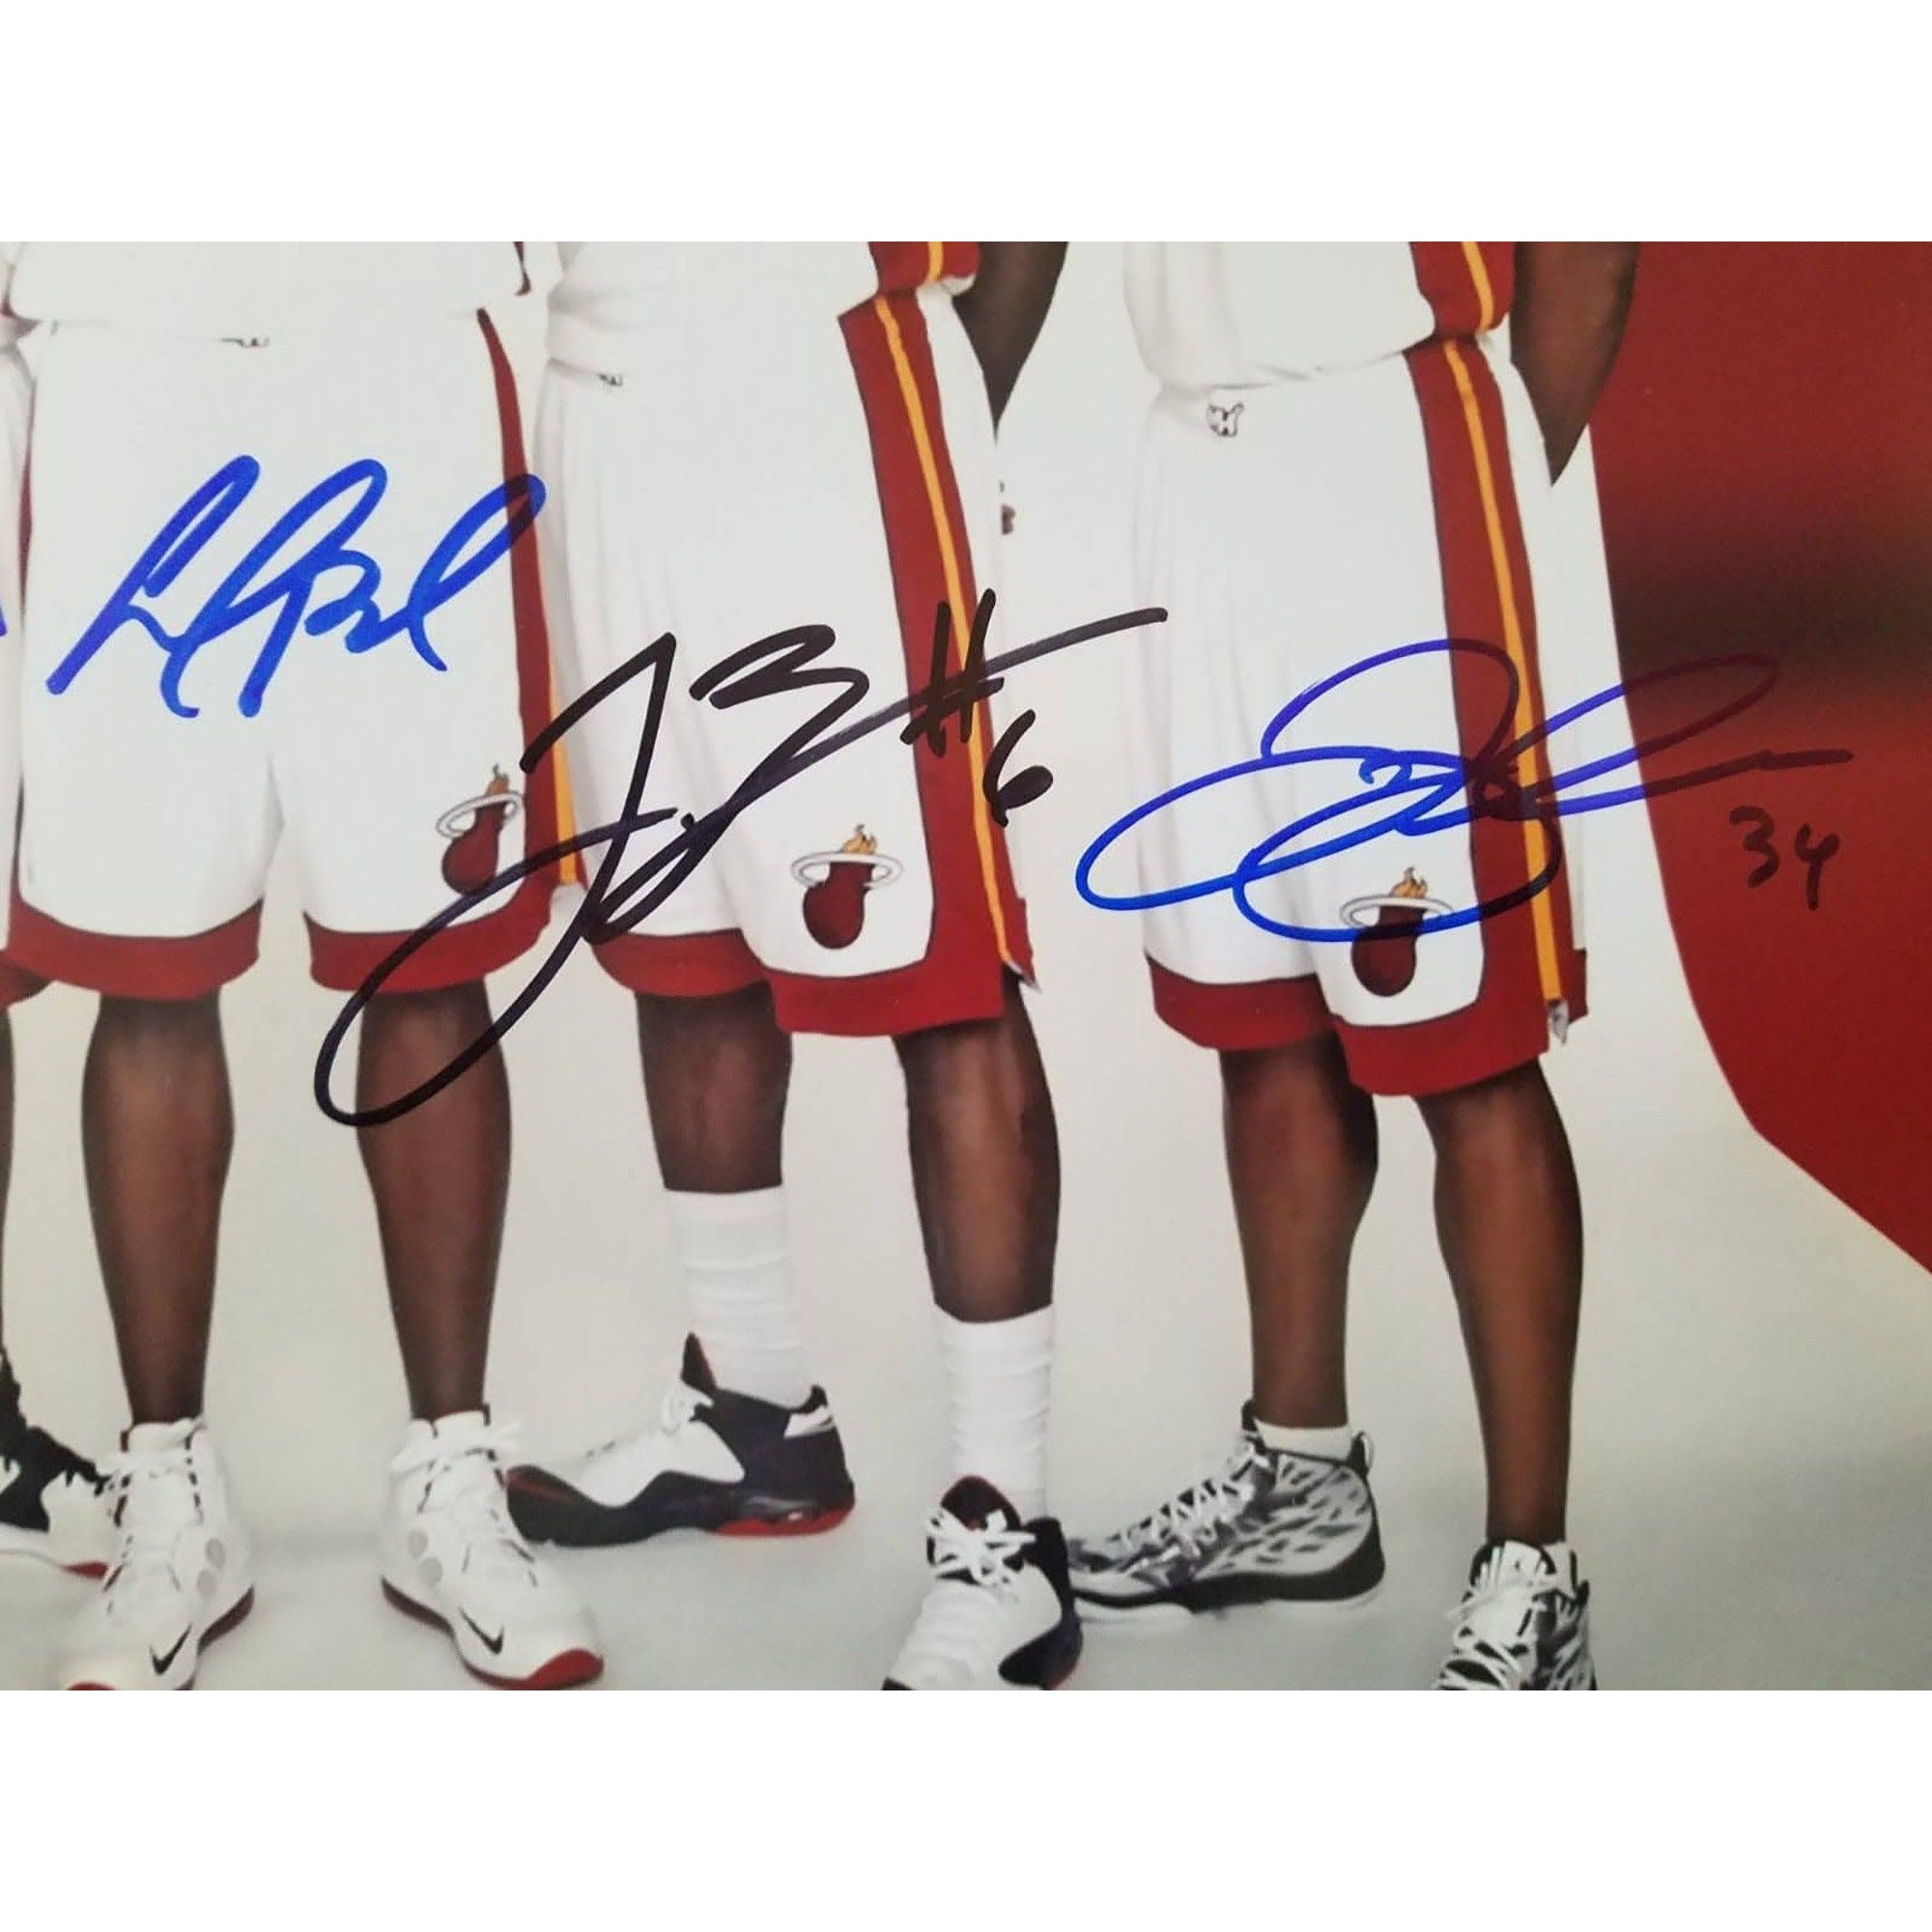 Dwyane Wade, Chris Bosh, LeBron James, Ray Allen 11 by 14 signed photo